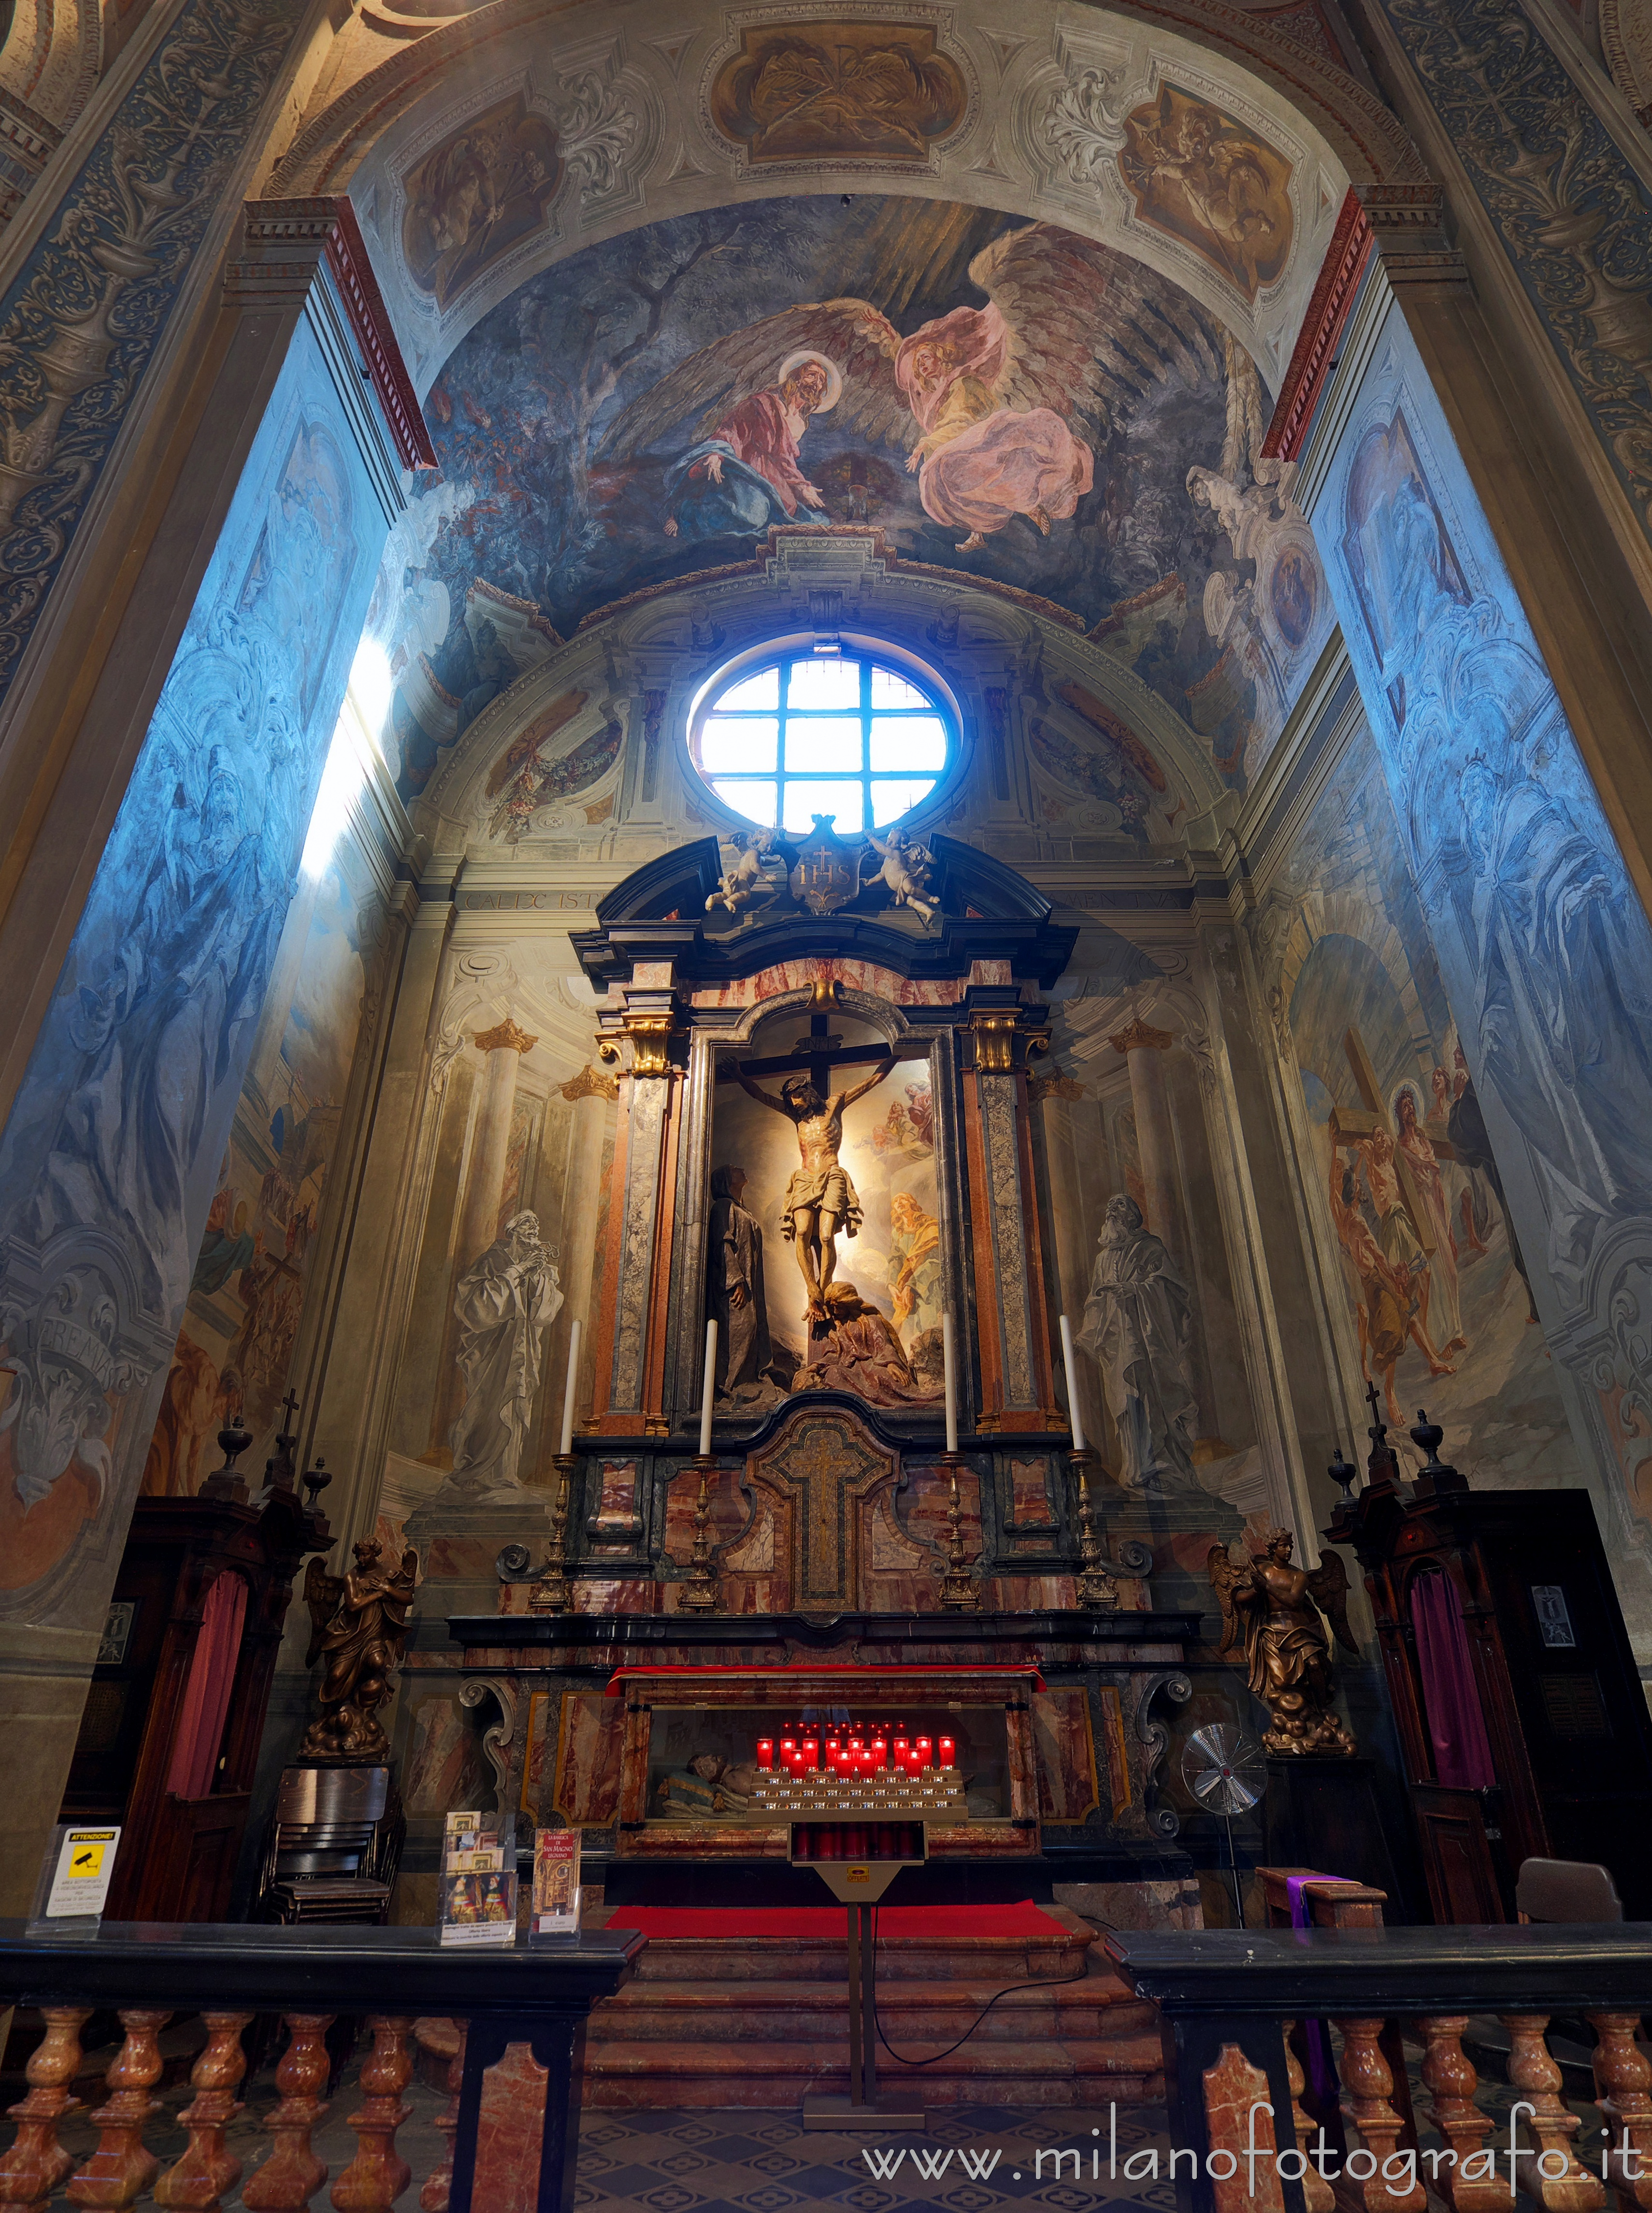 Legnano (Milan, Italy): Interior of the Chapel of the Crucifix in the Basilica of San Magno - Legnano (Milan, Italy)